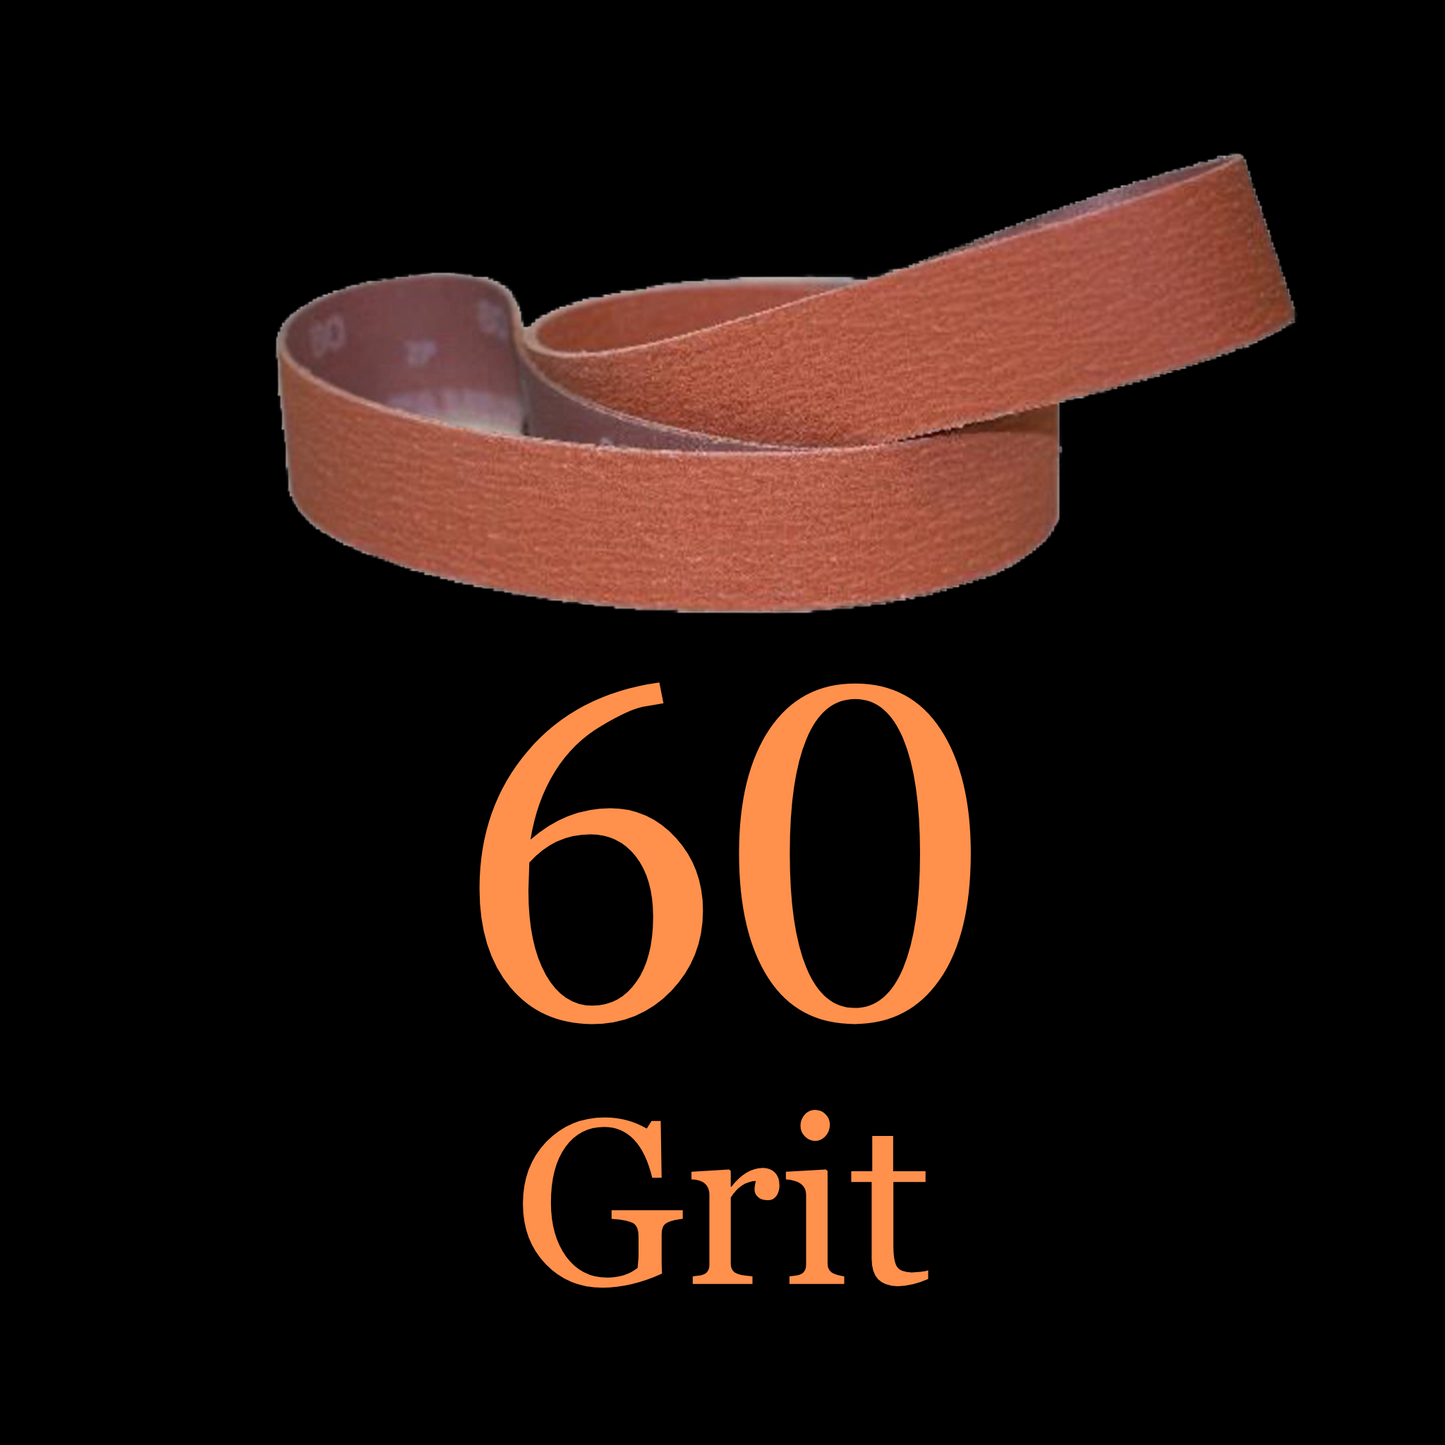 1” x 30” Blaze Ceramic Belt 60 Grit